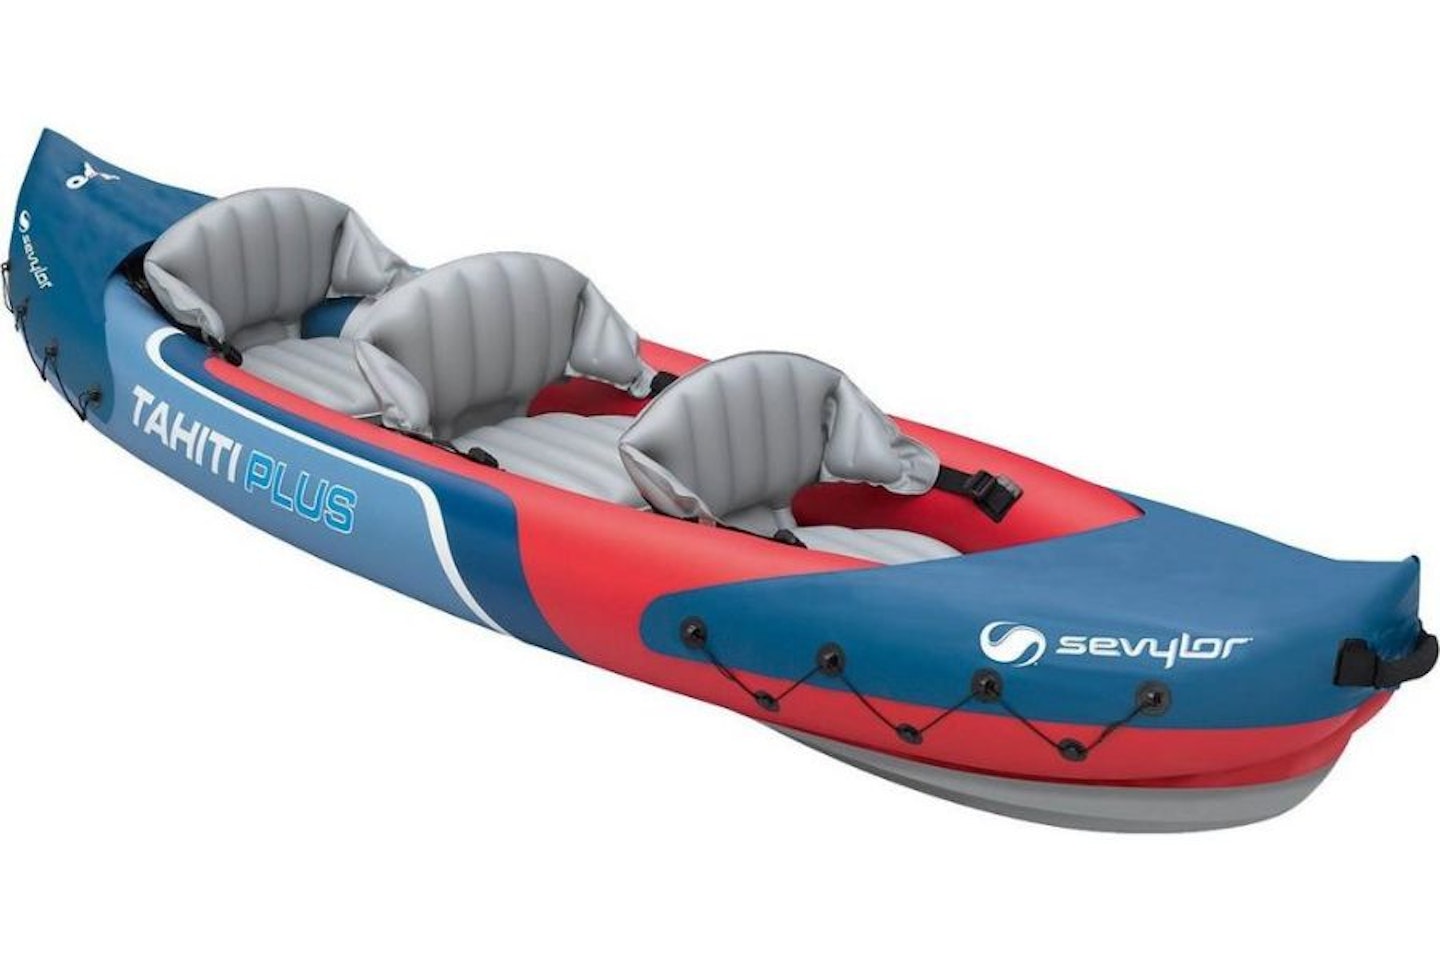 Tahiti Plus Inflatable Kayak - one of the best three-person inflatable kayaks